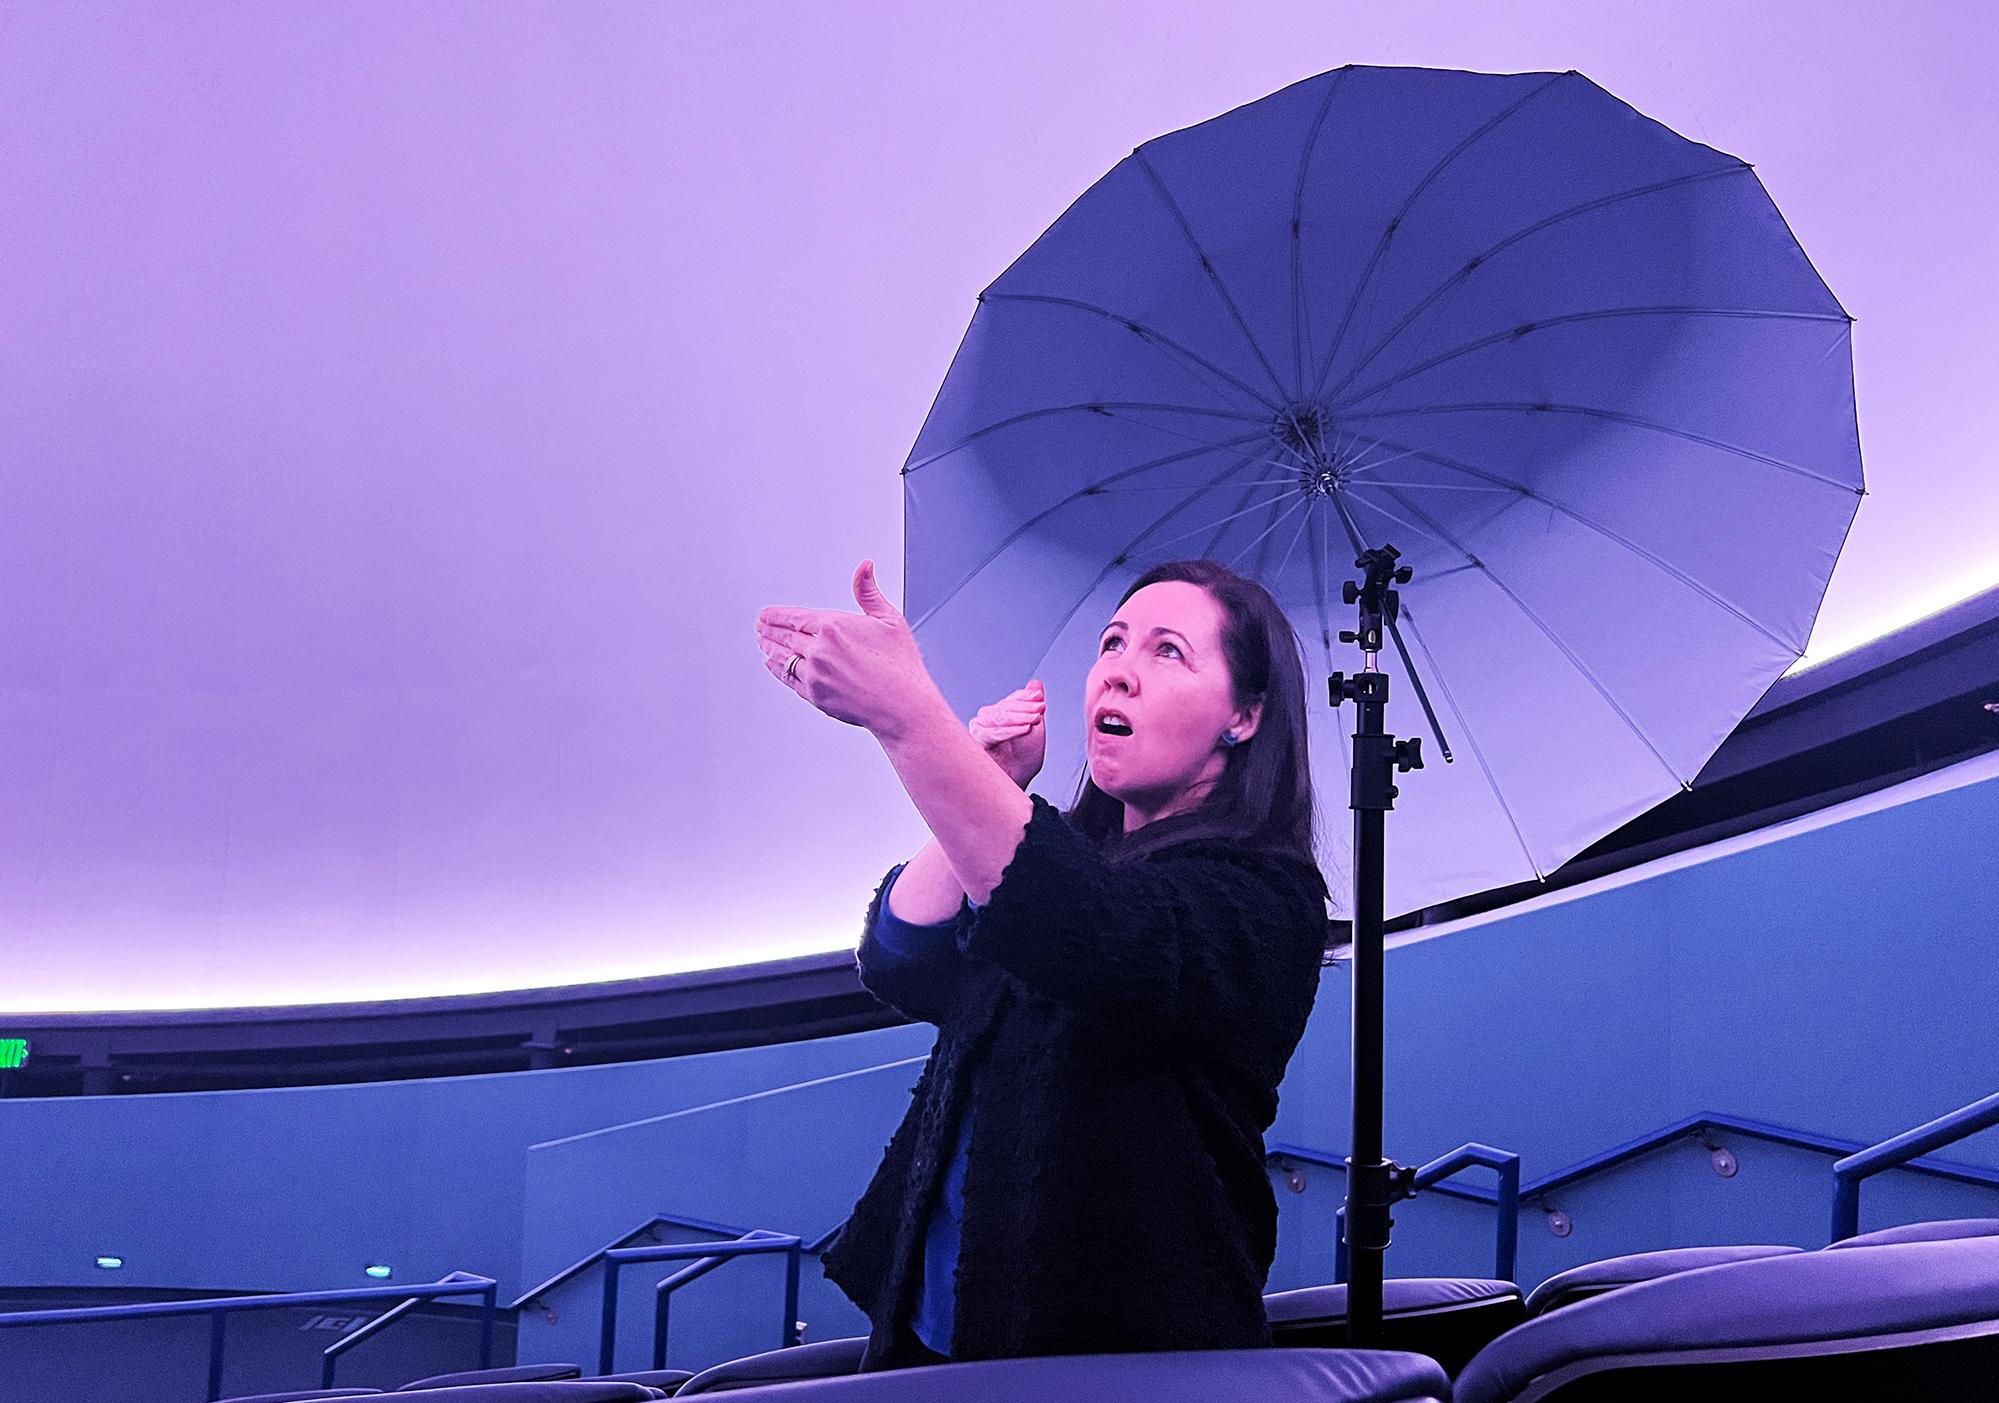 Guide presents ASL interpretation during planetarium show